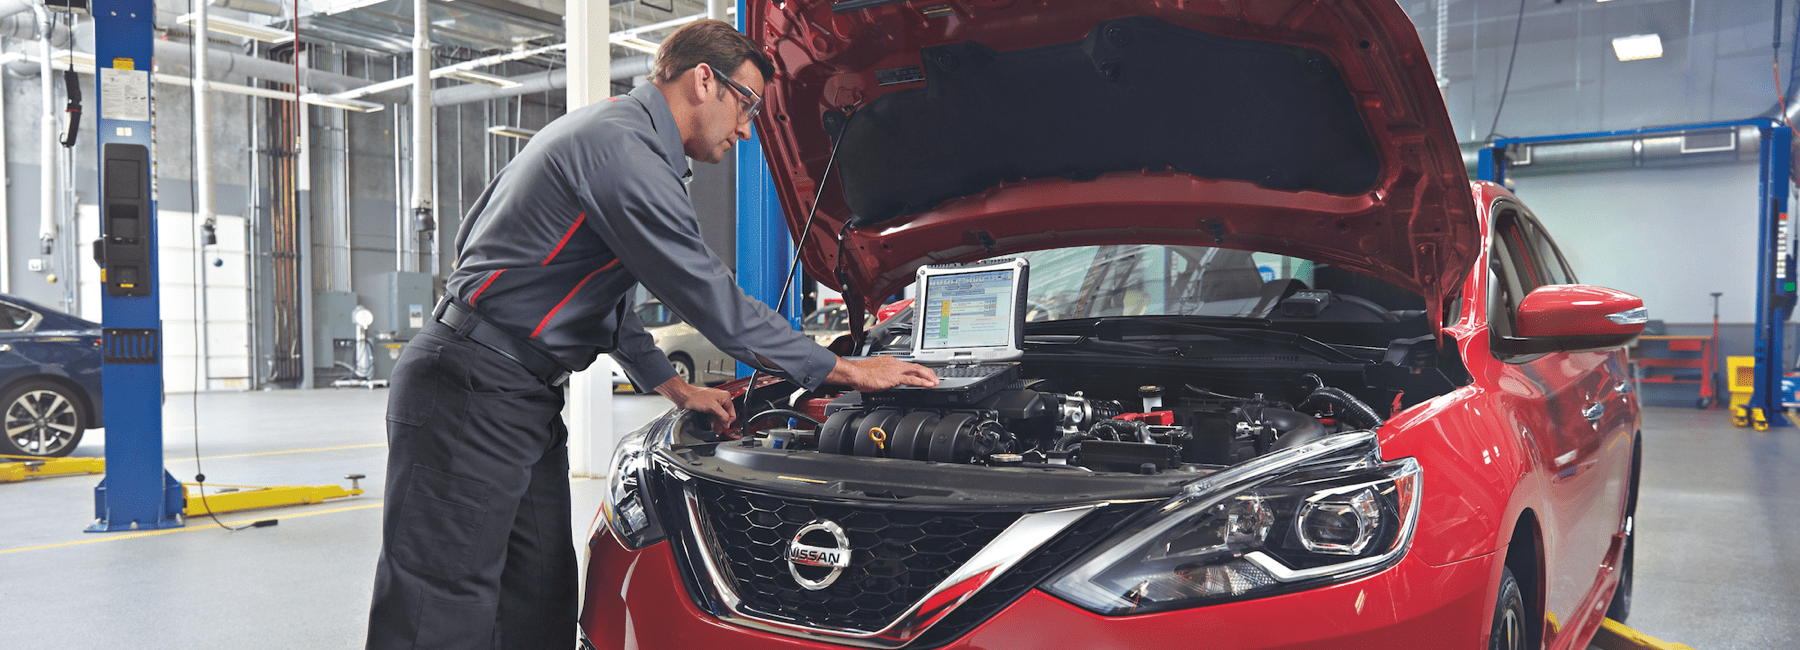 Nissan-technician-checks-engine